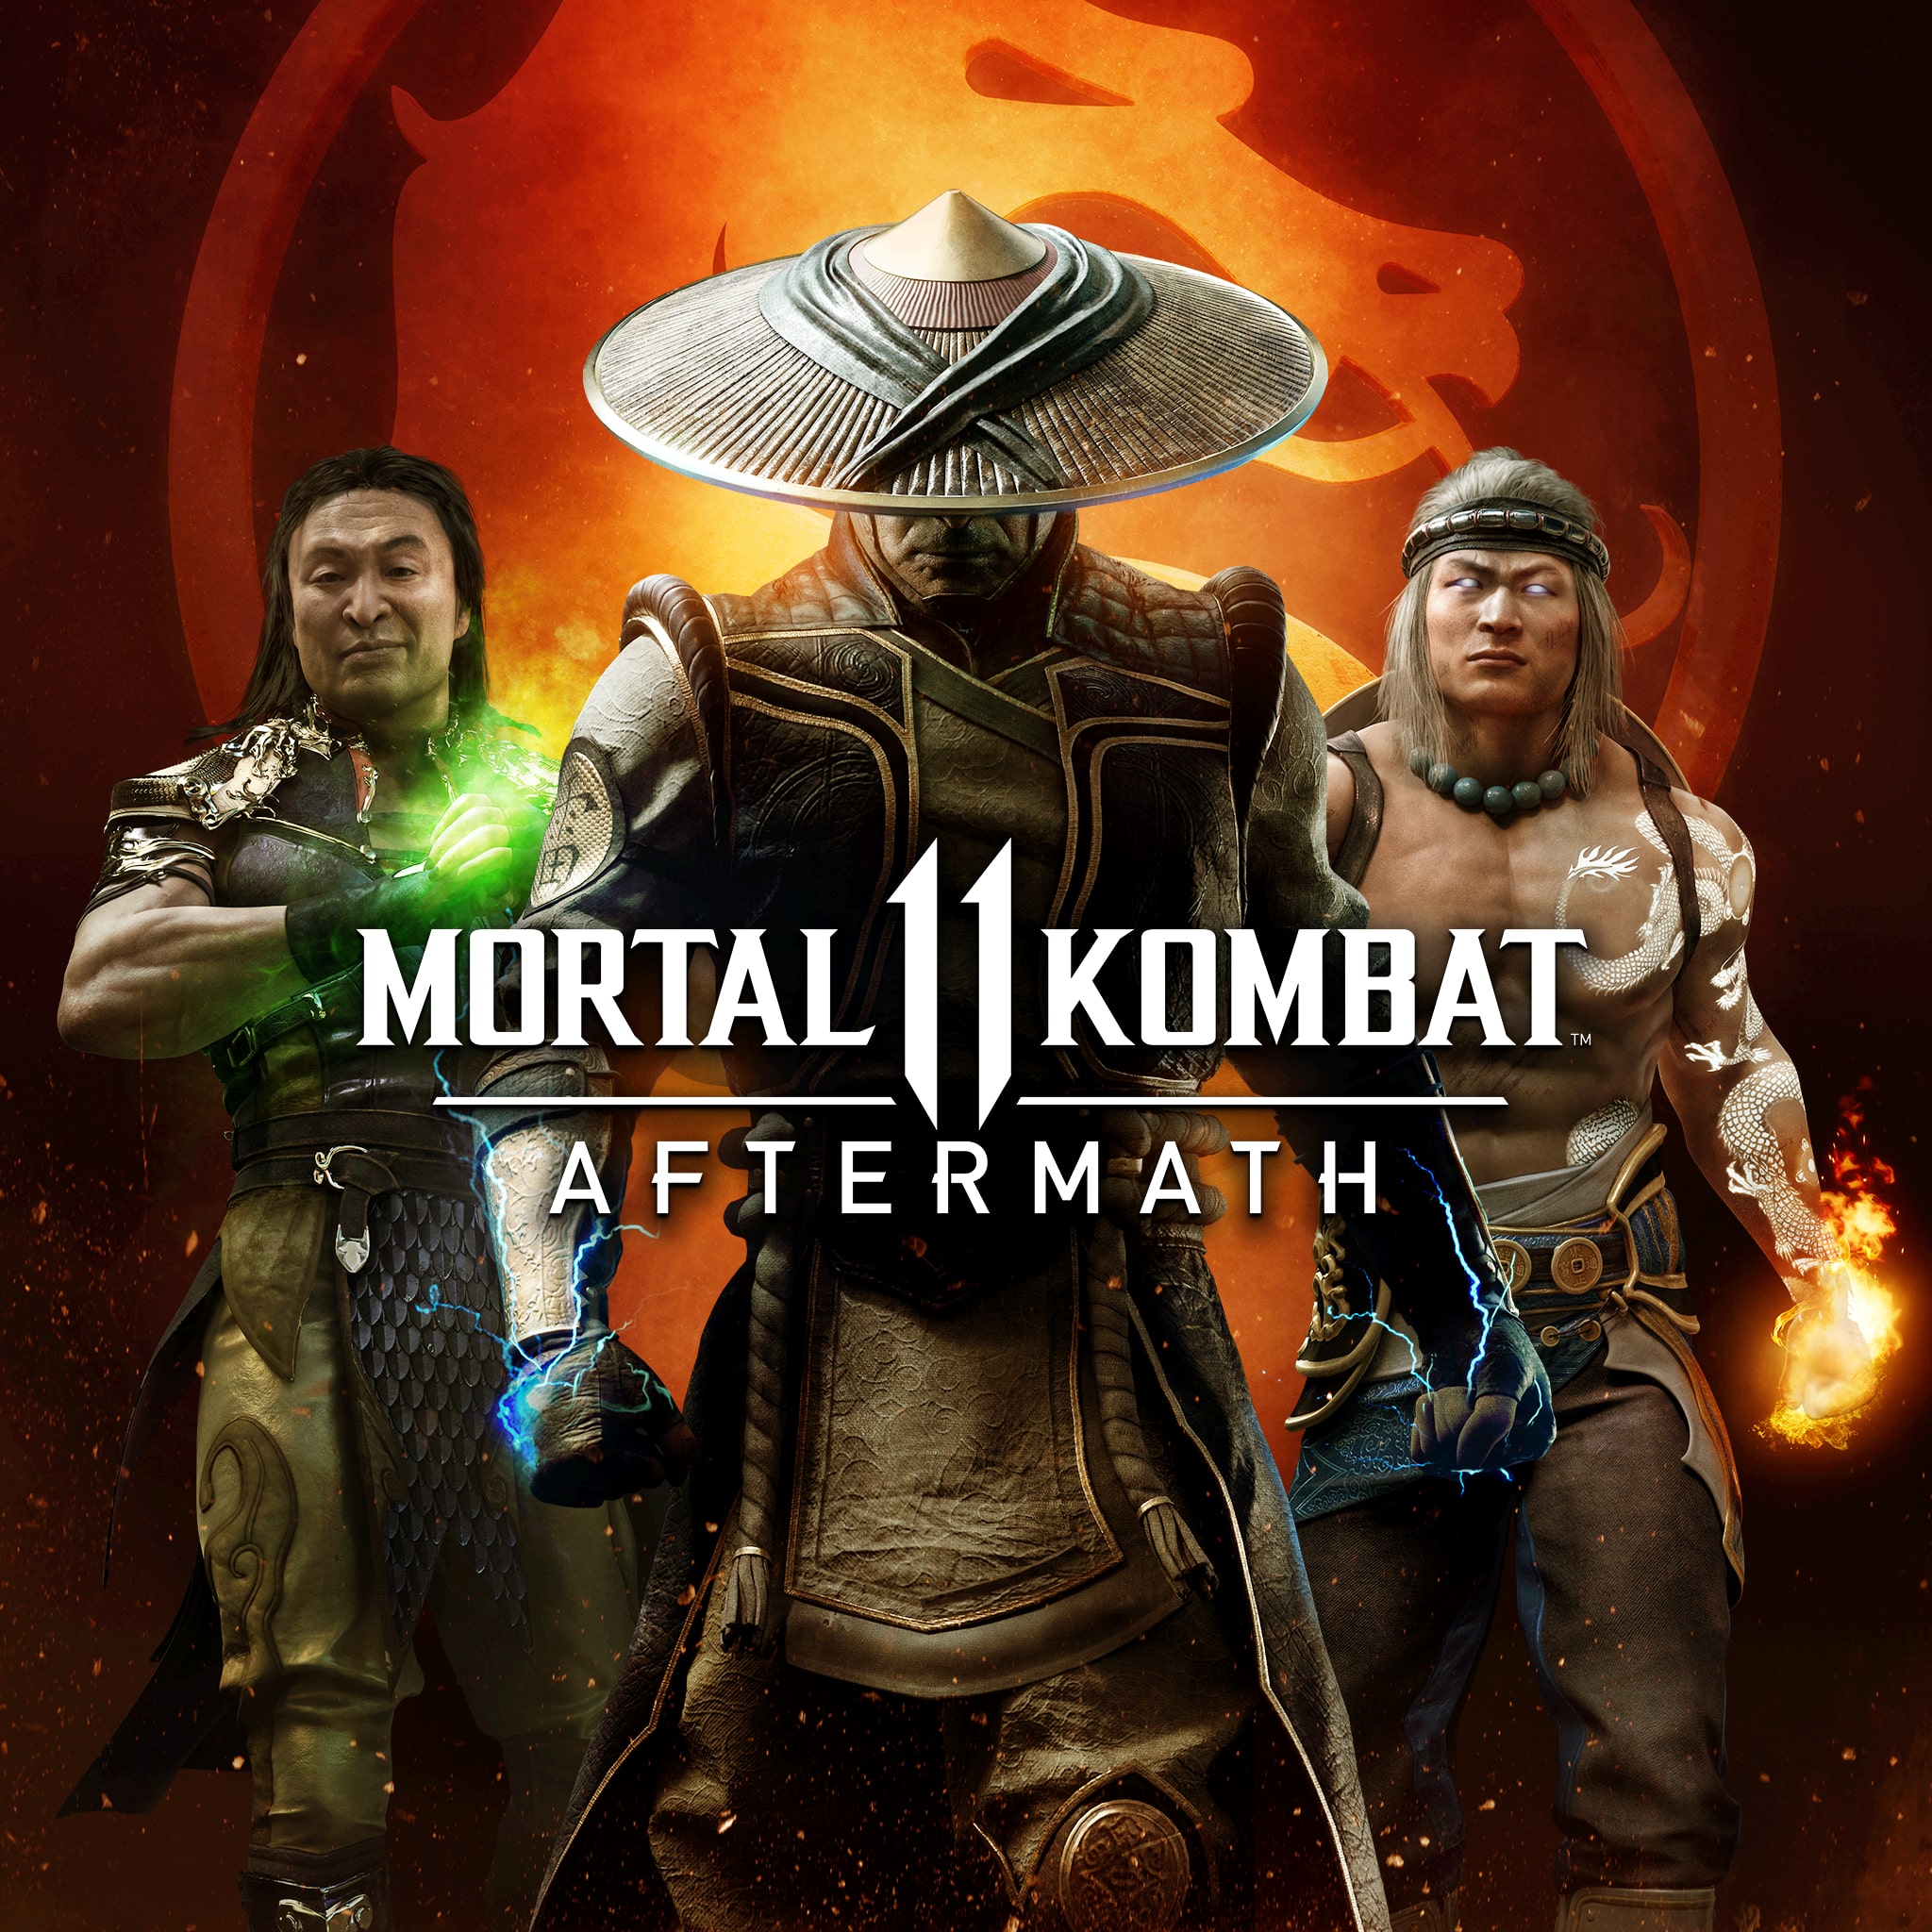 Mortal Kombat 11 Story: Aftermath